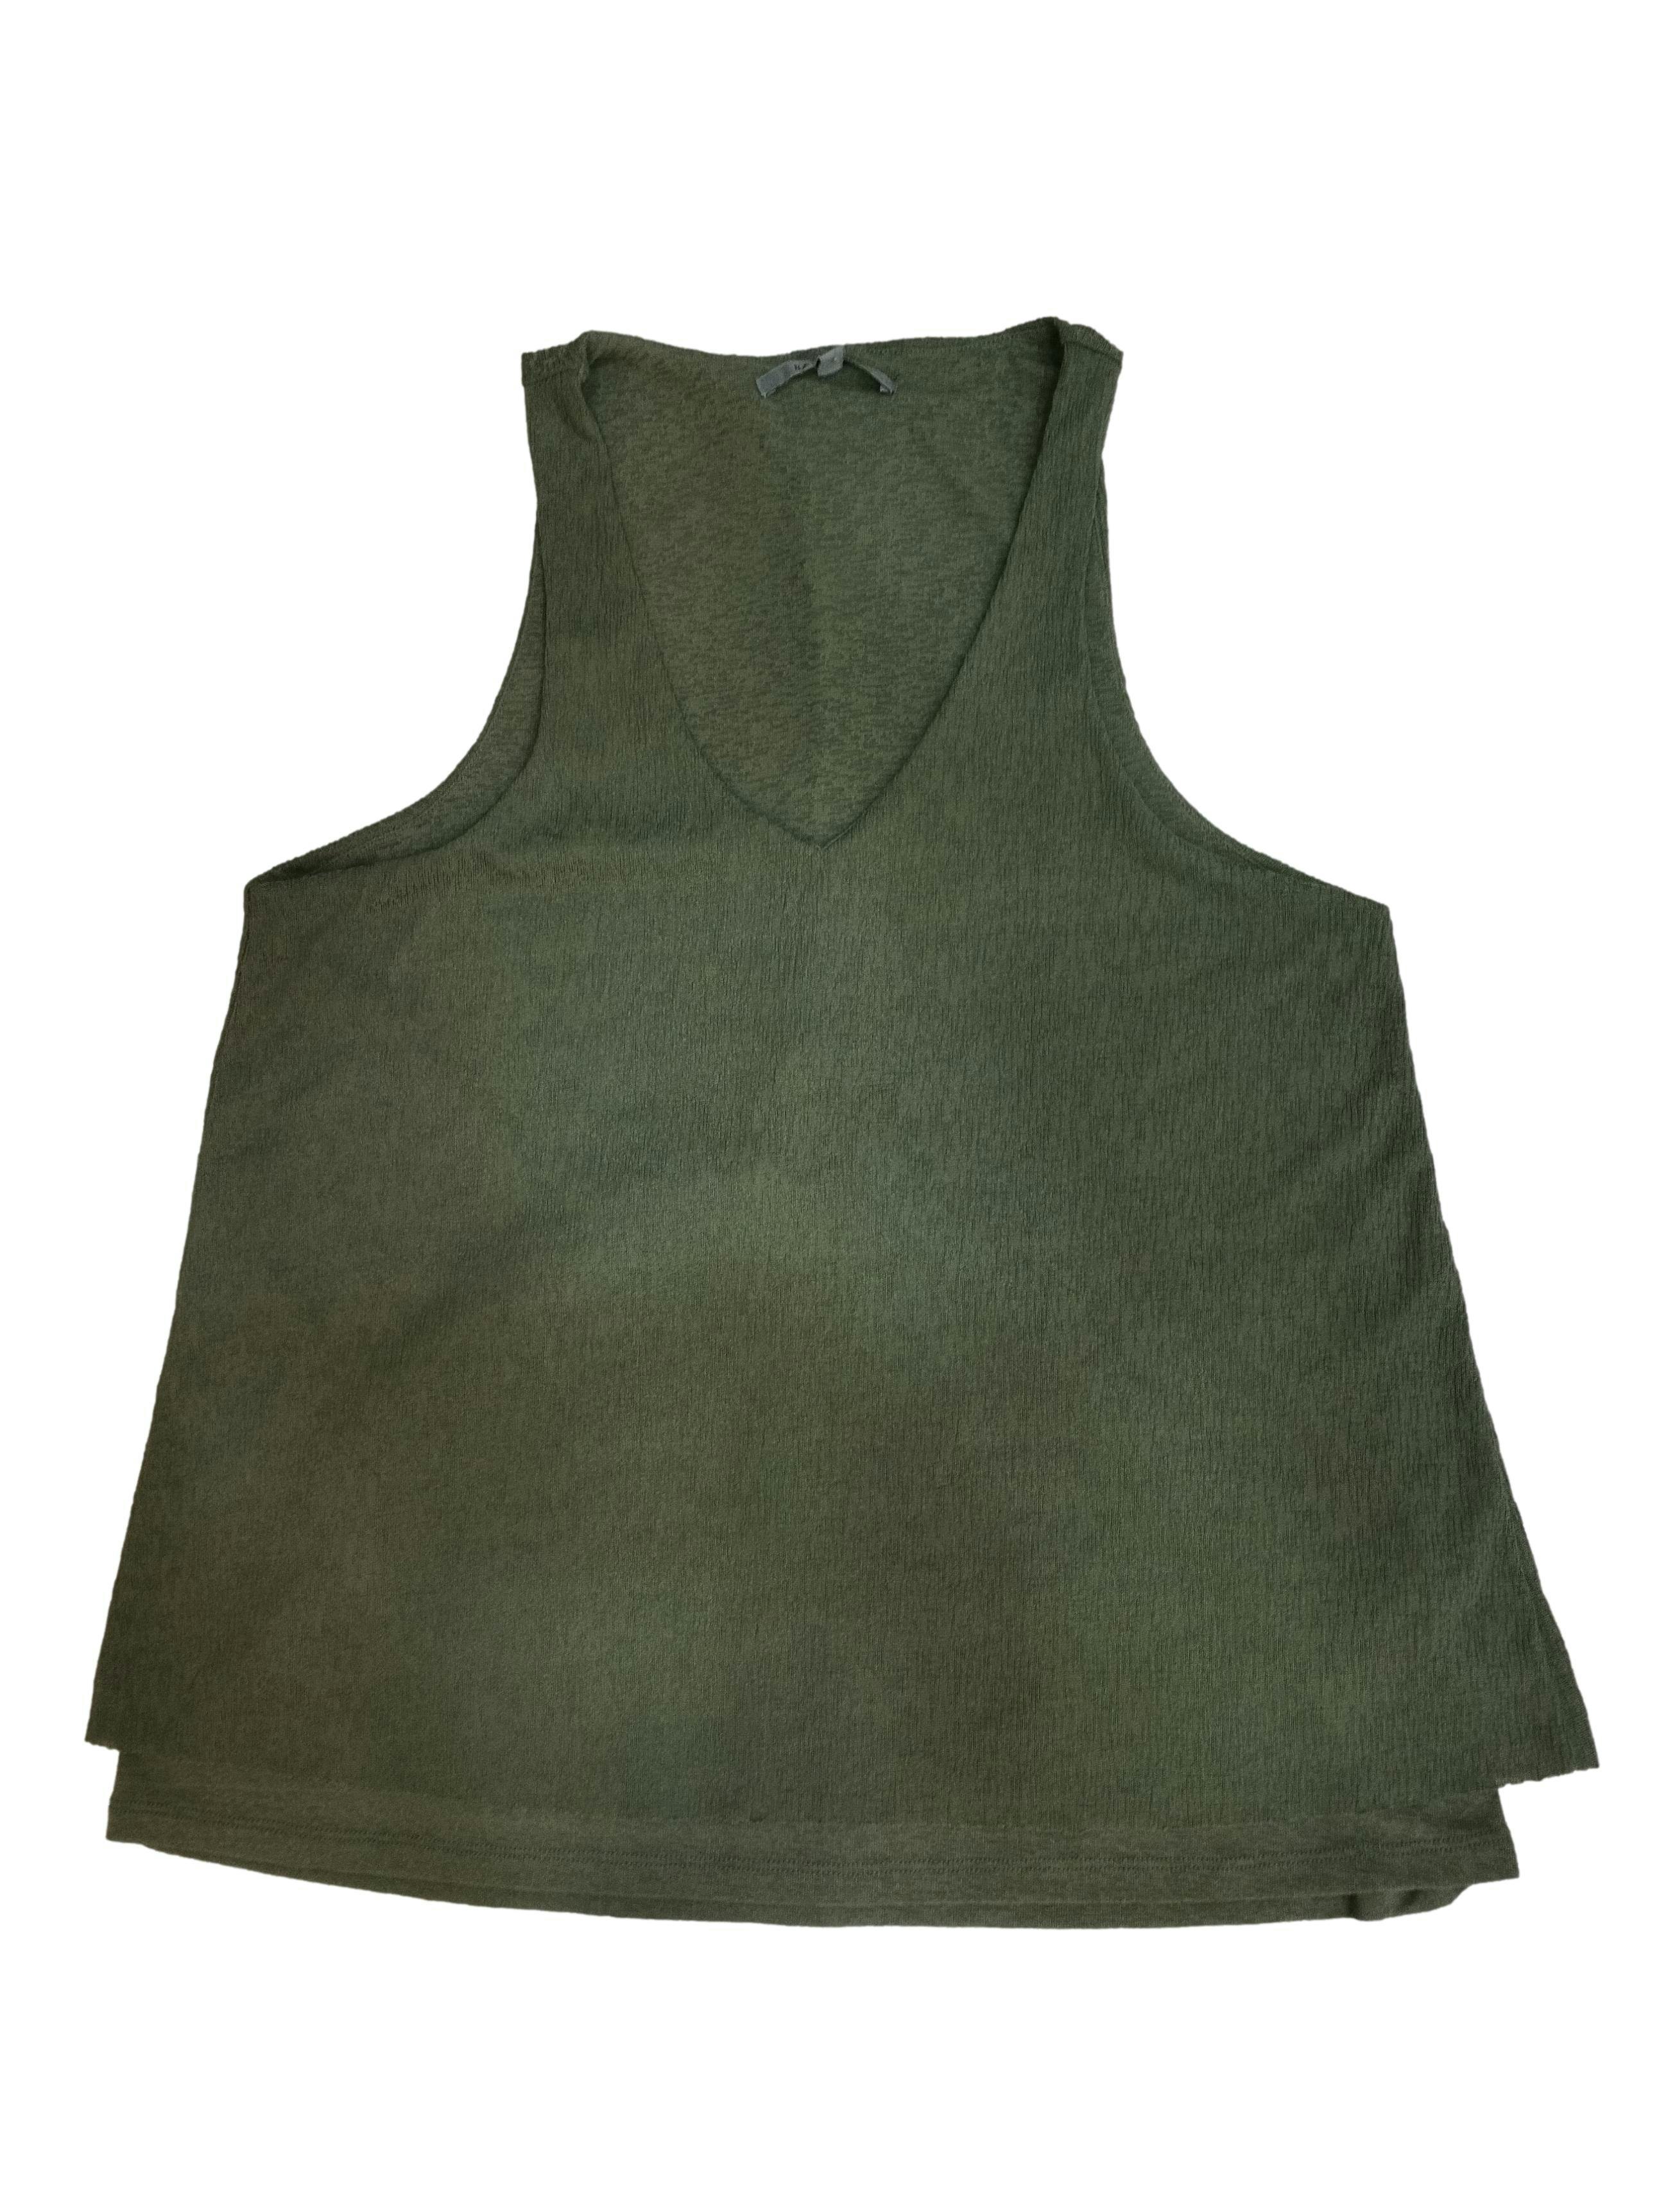 Blusa Basement verde militar estilo craquelado, abertura posterior, manga cero. Busto: 88 cm, Largo: 60 cm